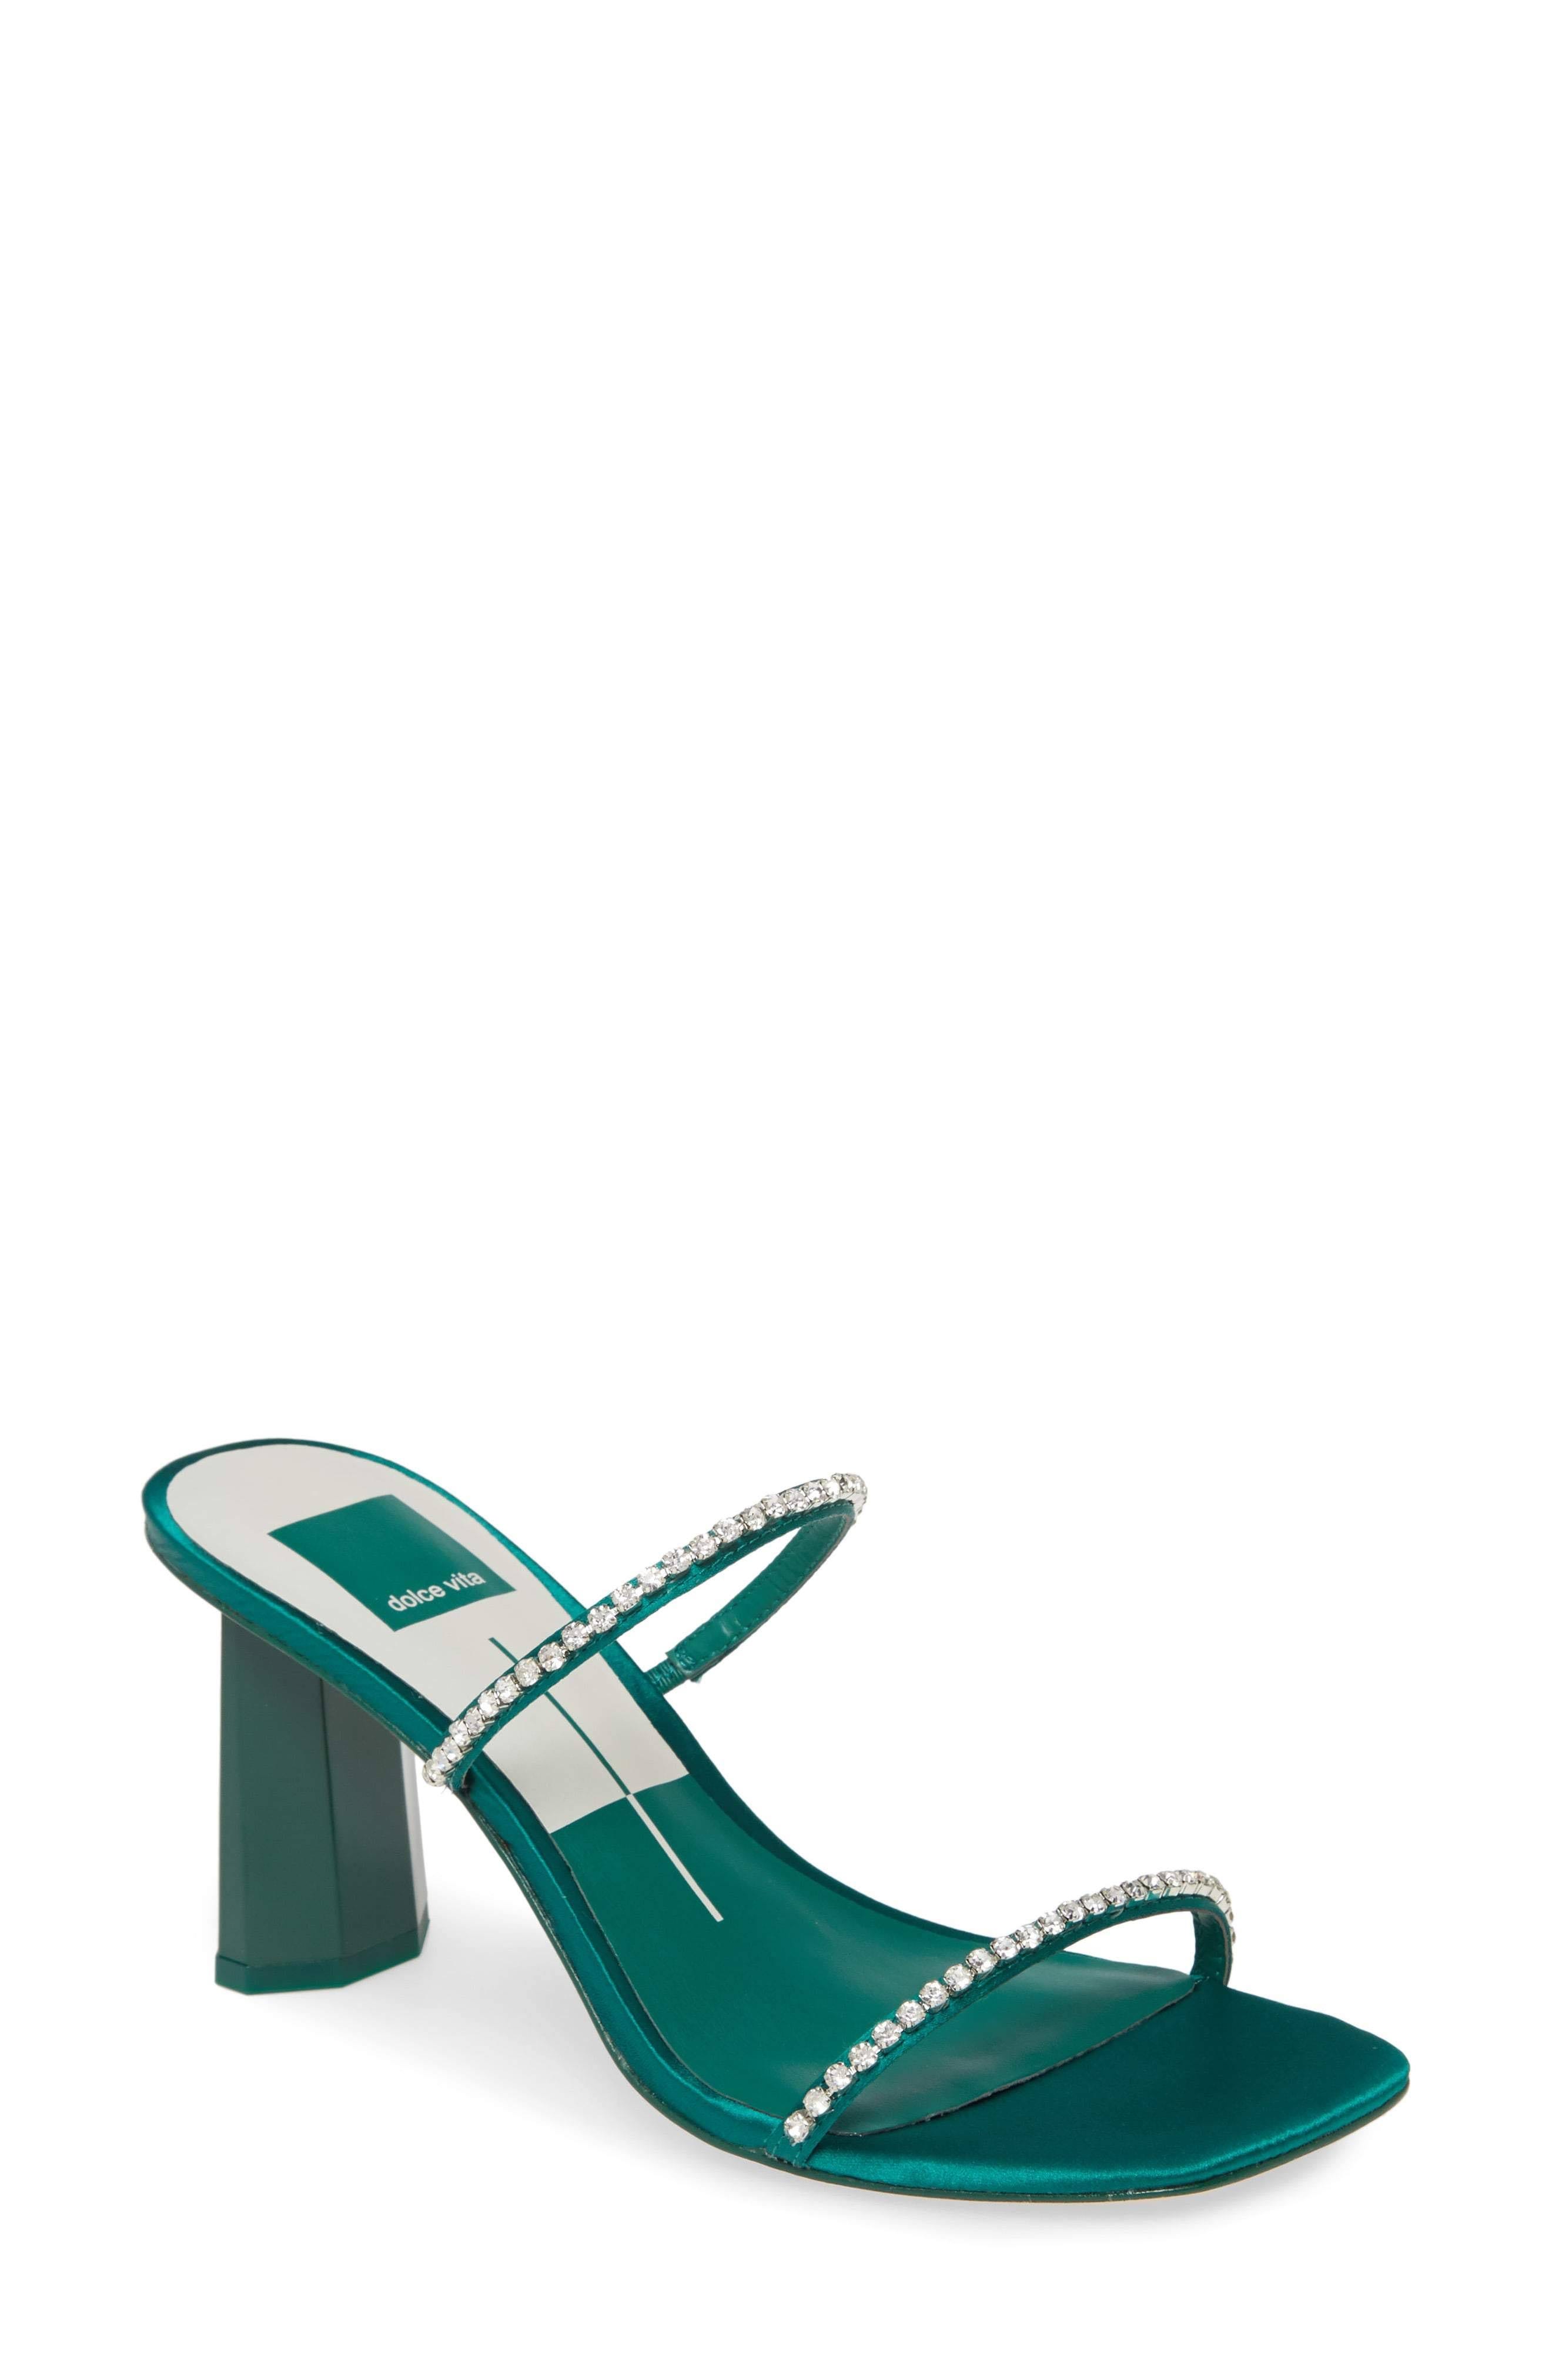 DOLCE VITA Green Embellished Heeled Sandals for Dressy Occasions | Image